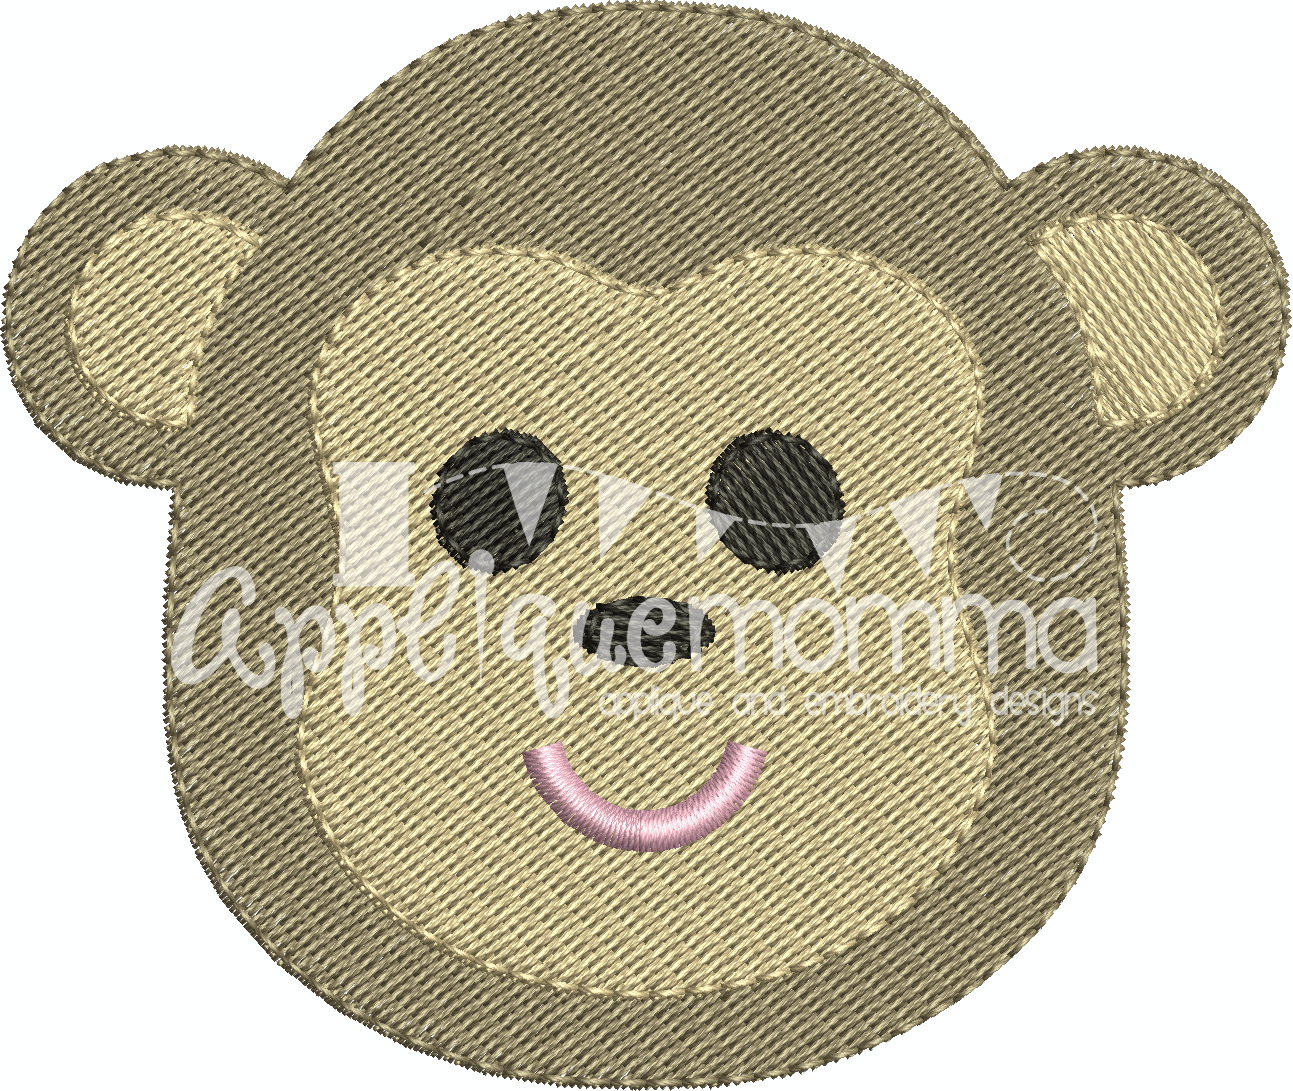 Monkey 2 Mini Embroidery Design